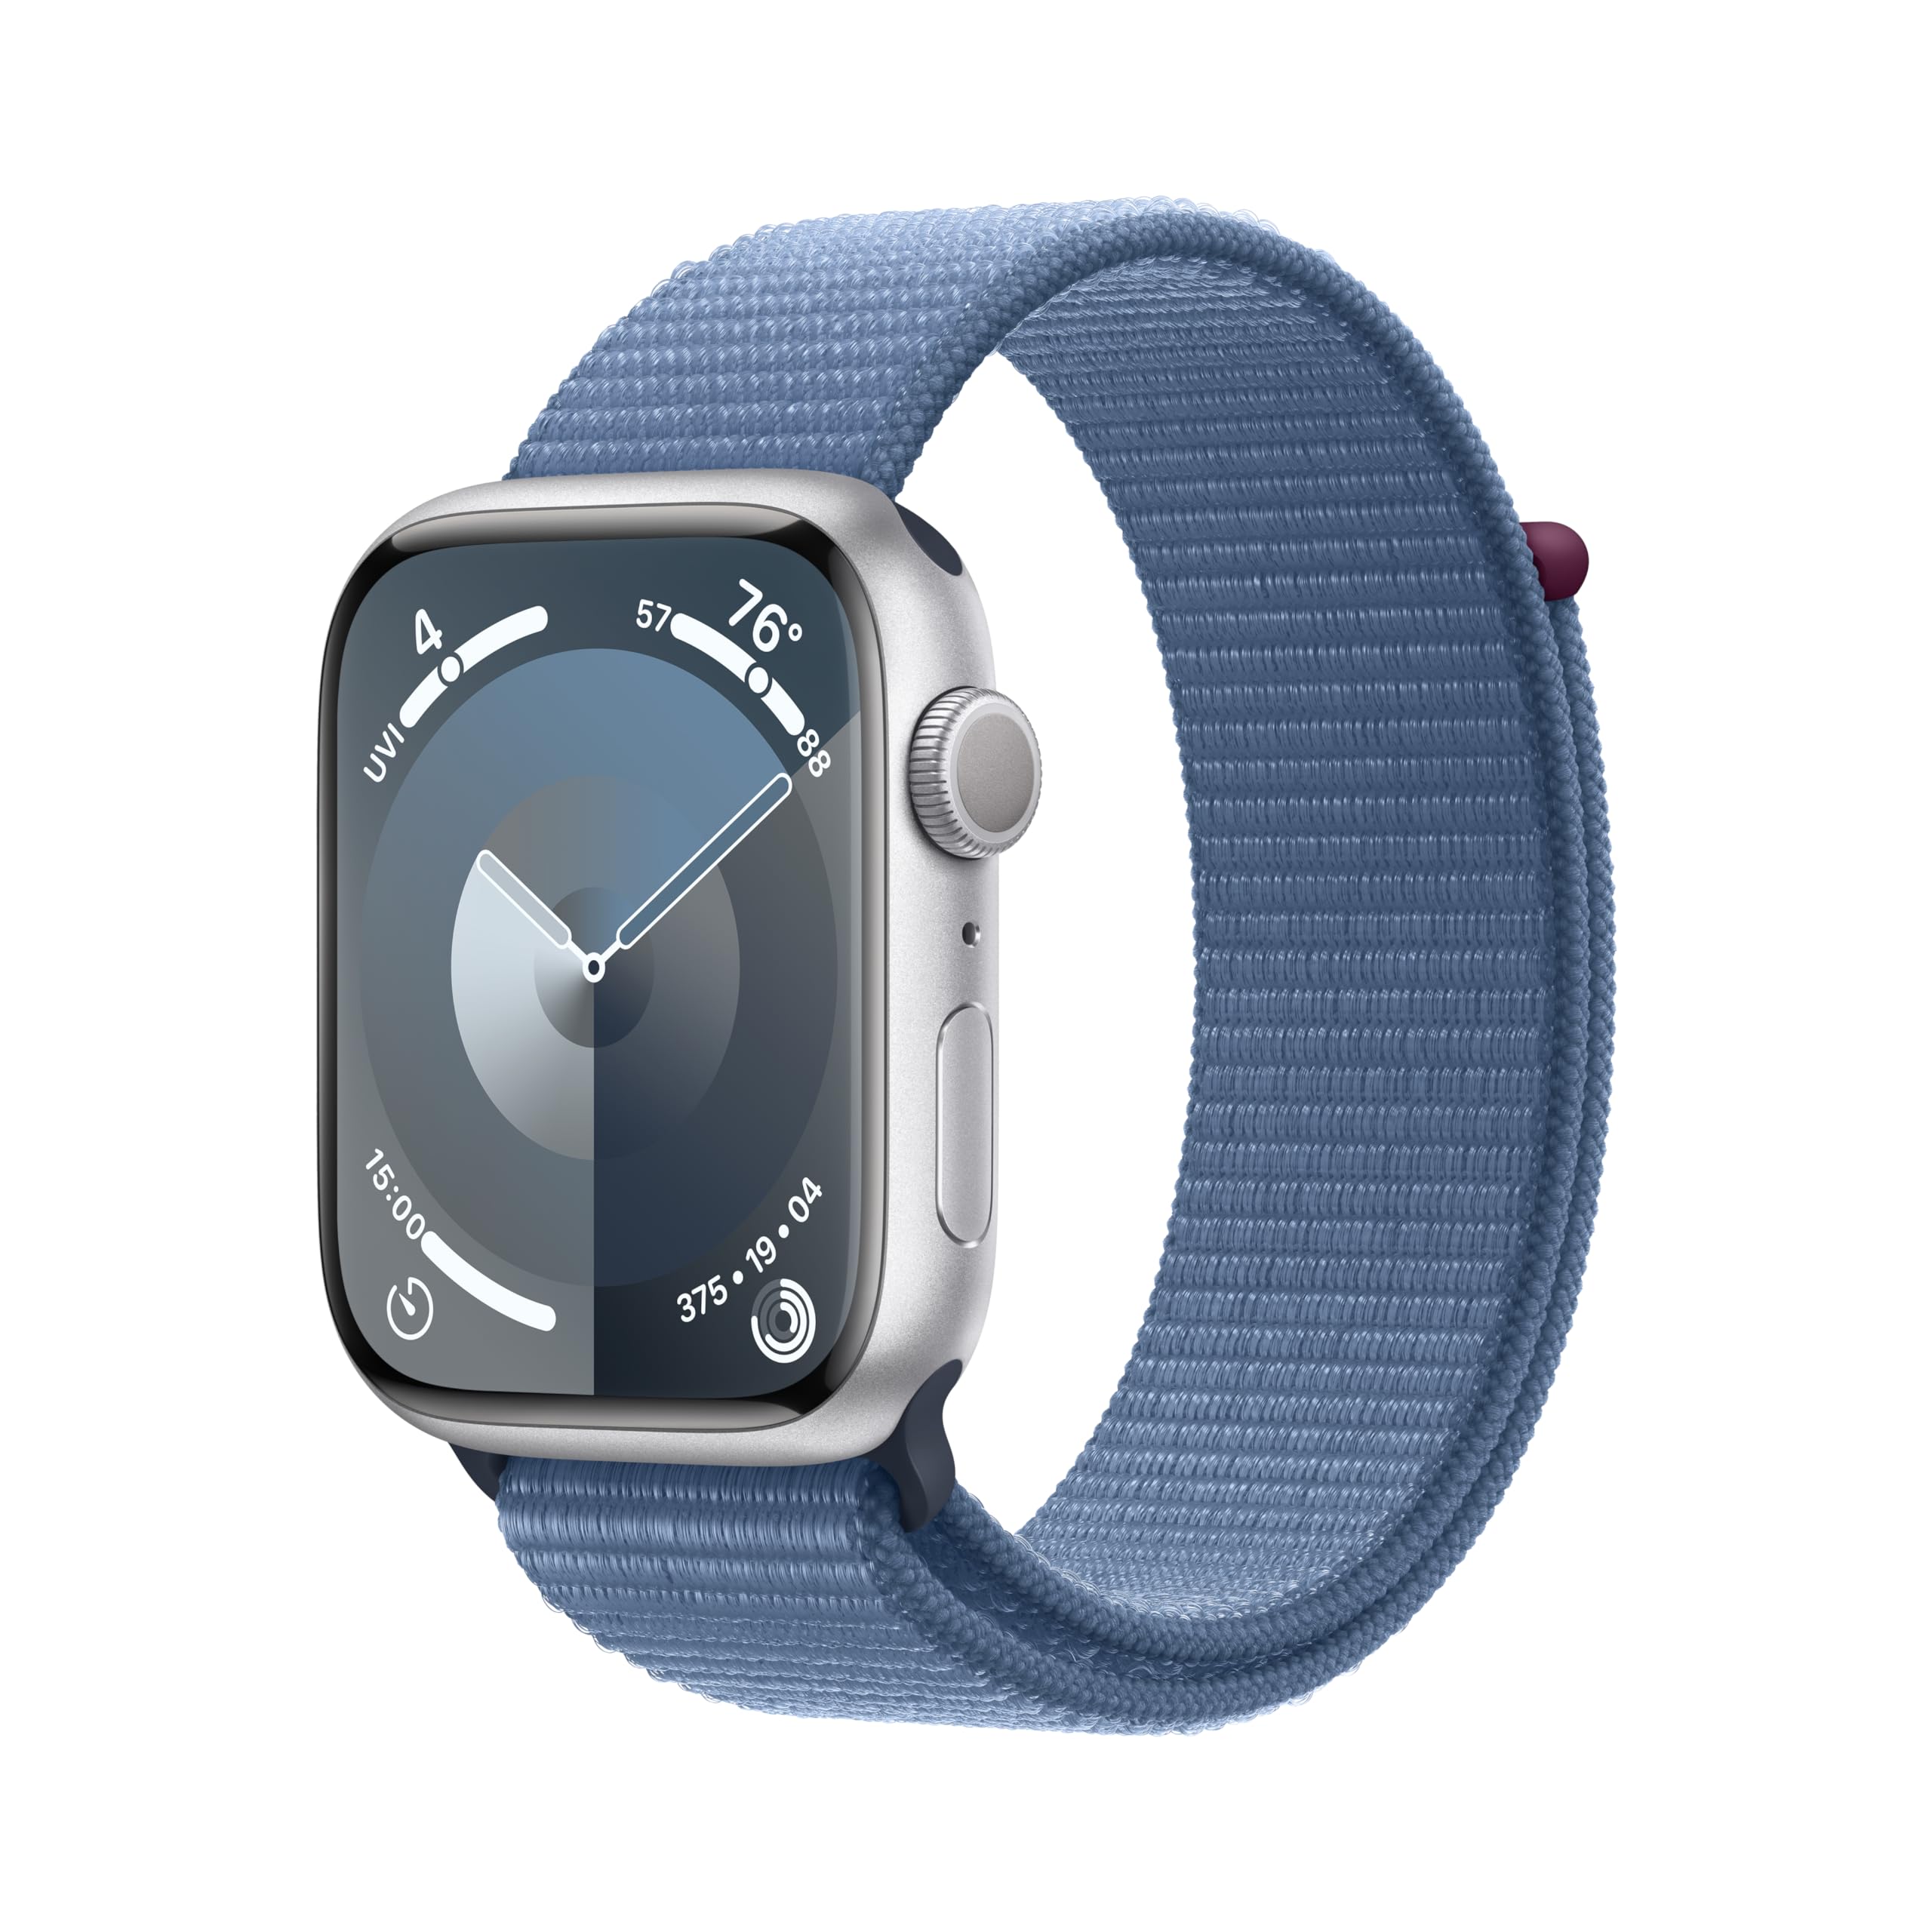 Apple watch Series-9 45mm GPS blue sport loop on Amazon for $379